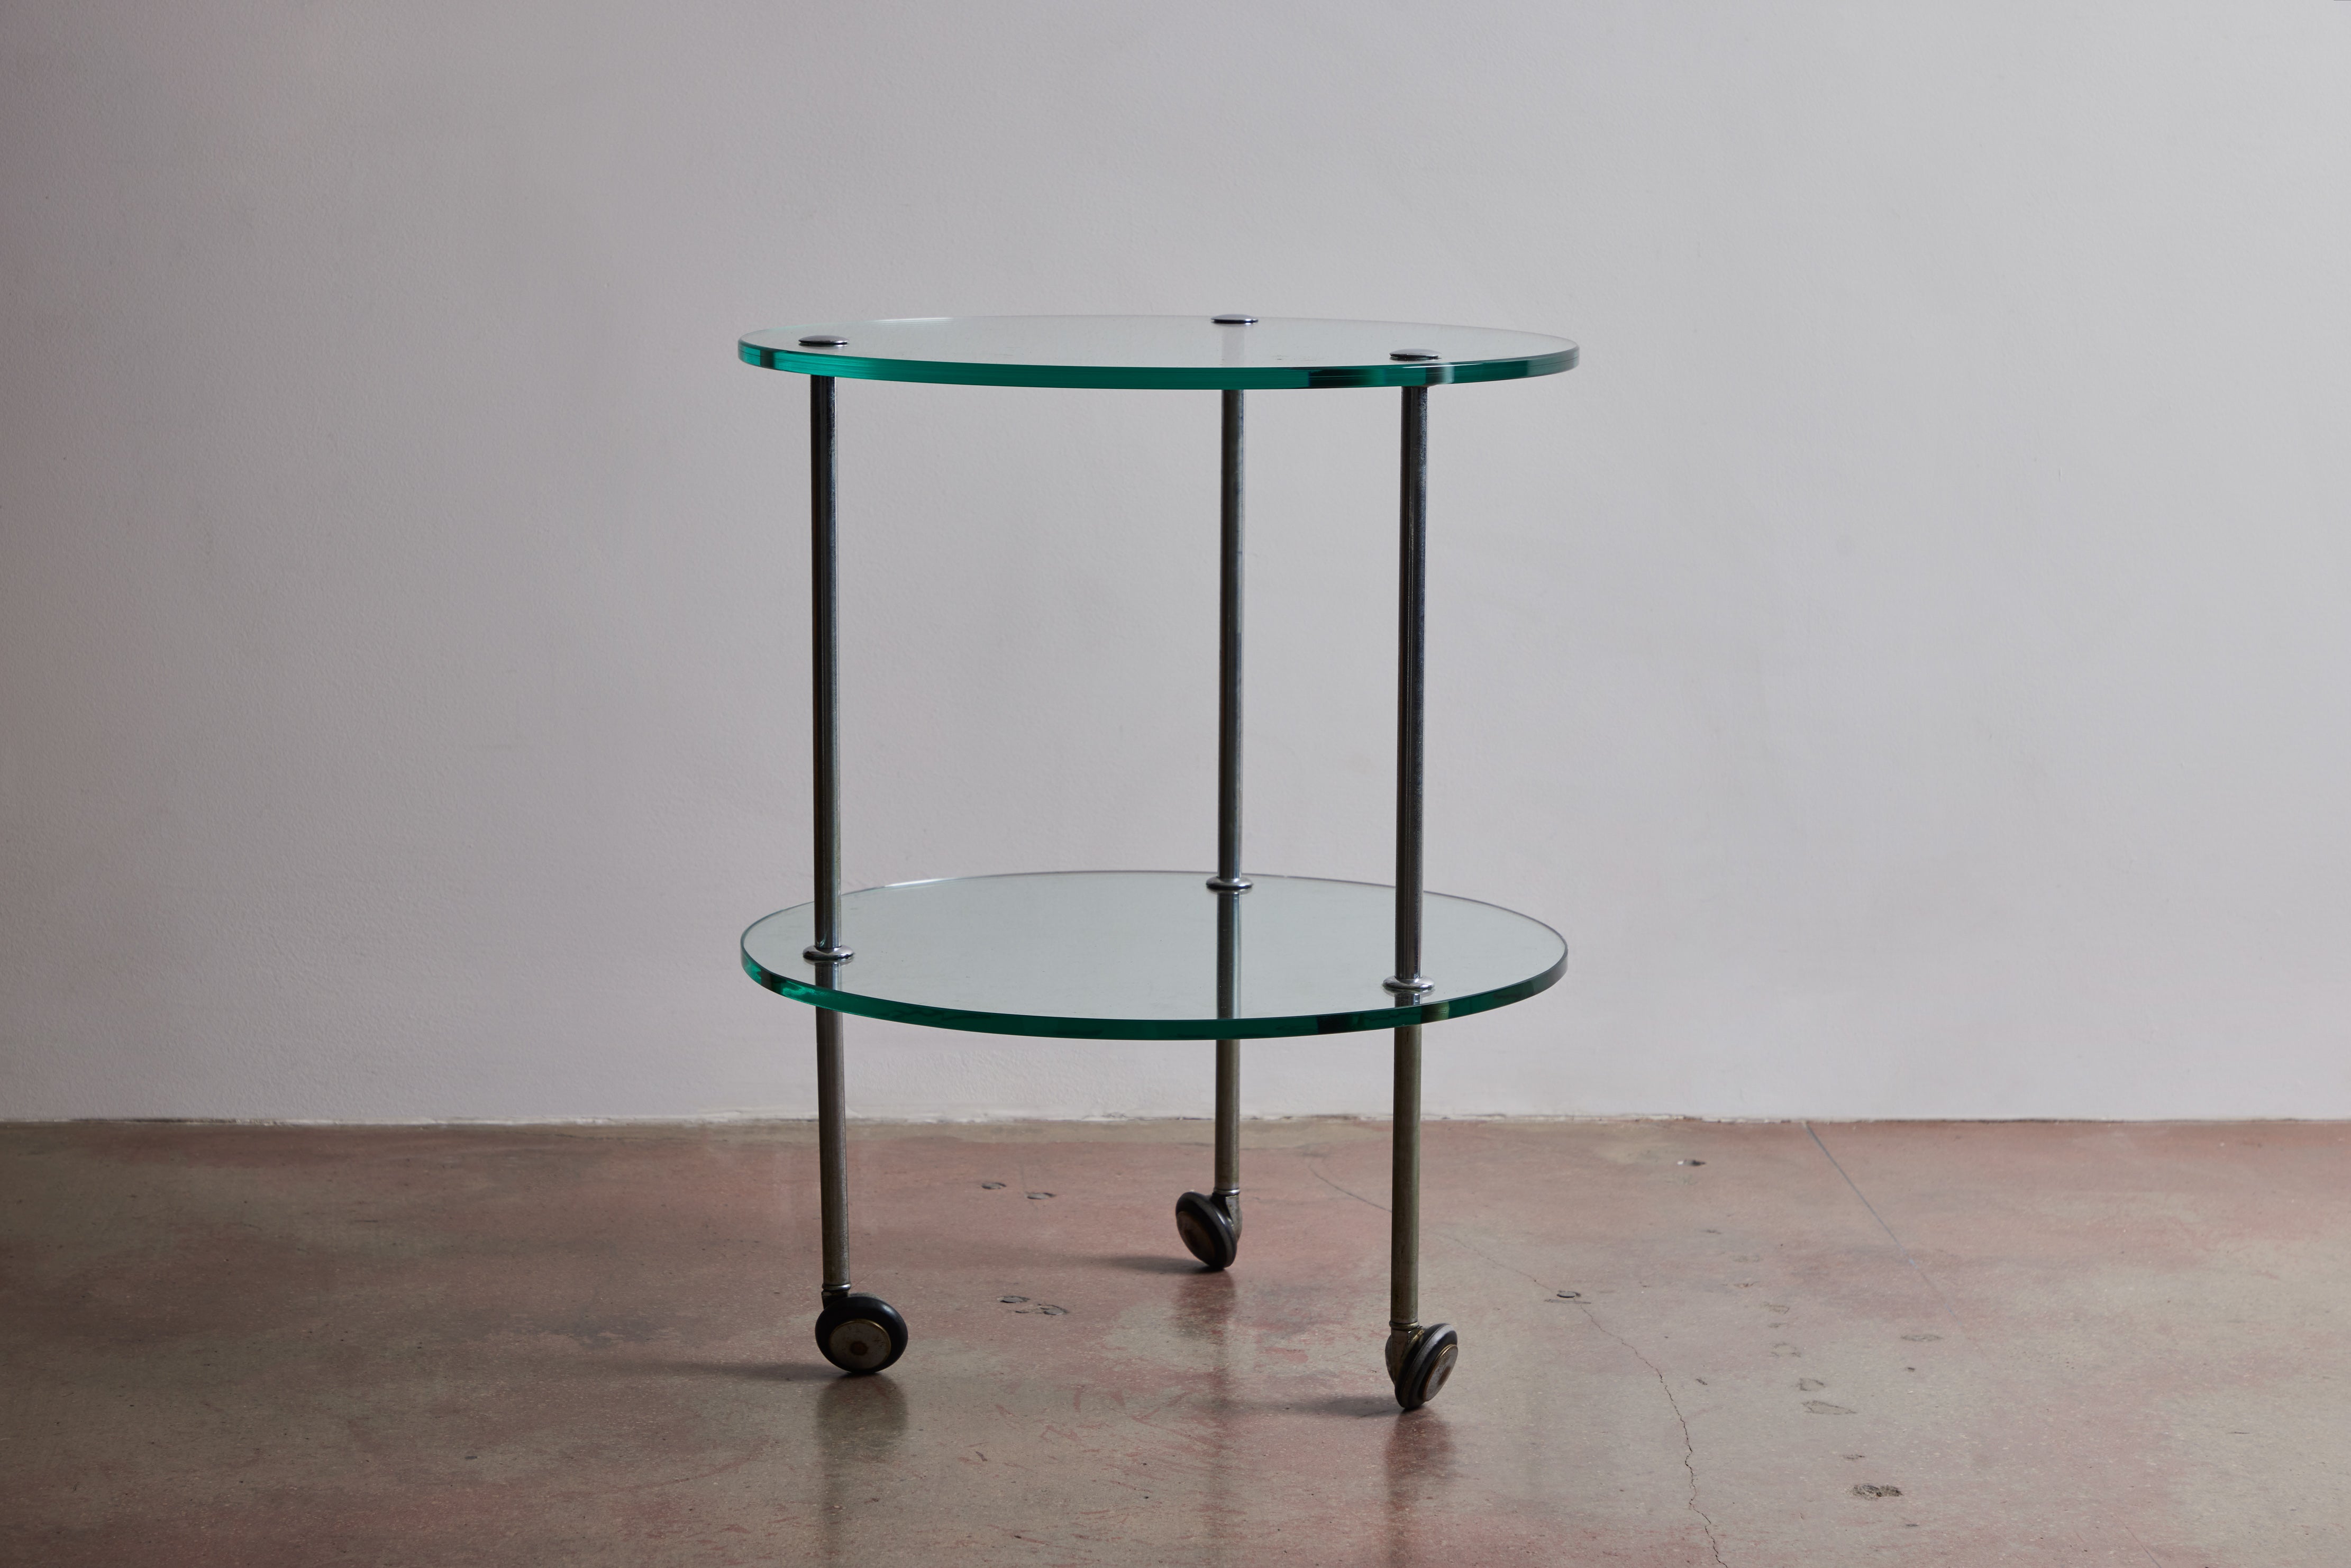 Occasional table in nickel plated brass and glass by Corrado Corradi dell’Acqua for Azucena. Made in Italy circa 1950s.